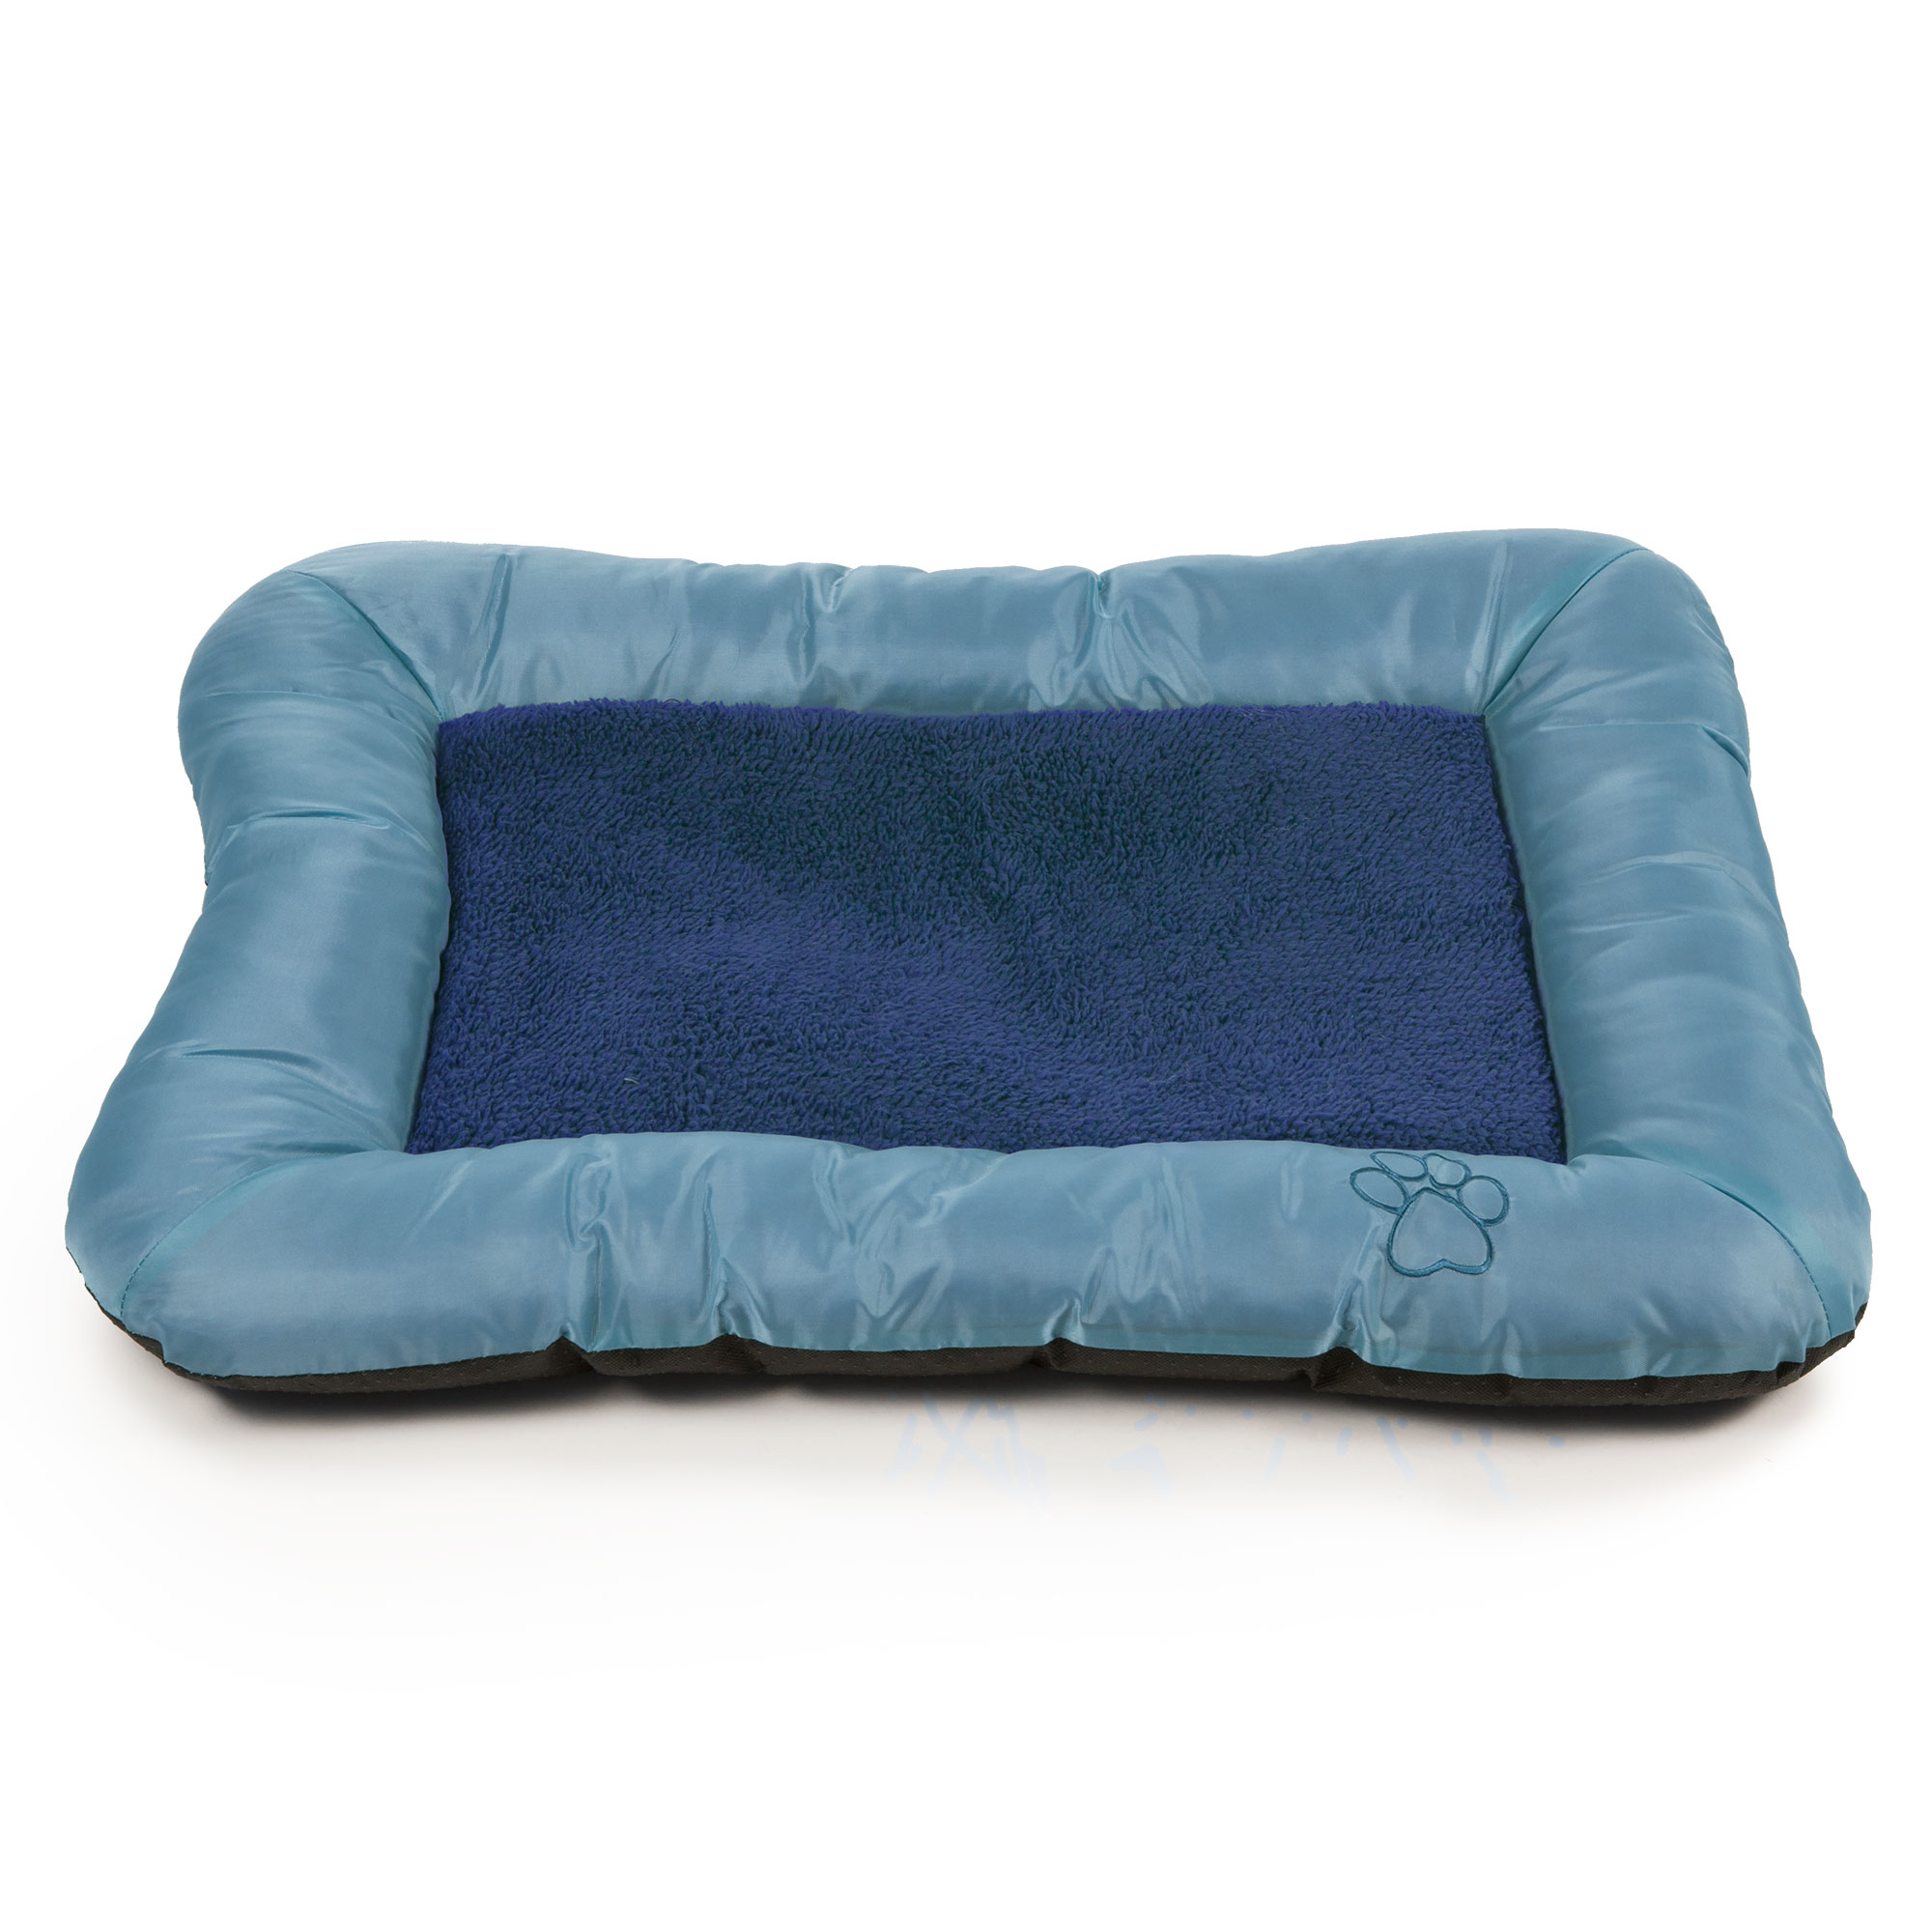 PAW Plush Cozy Pet Crate Dog Pet Bed - Blue - Extra Large